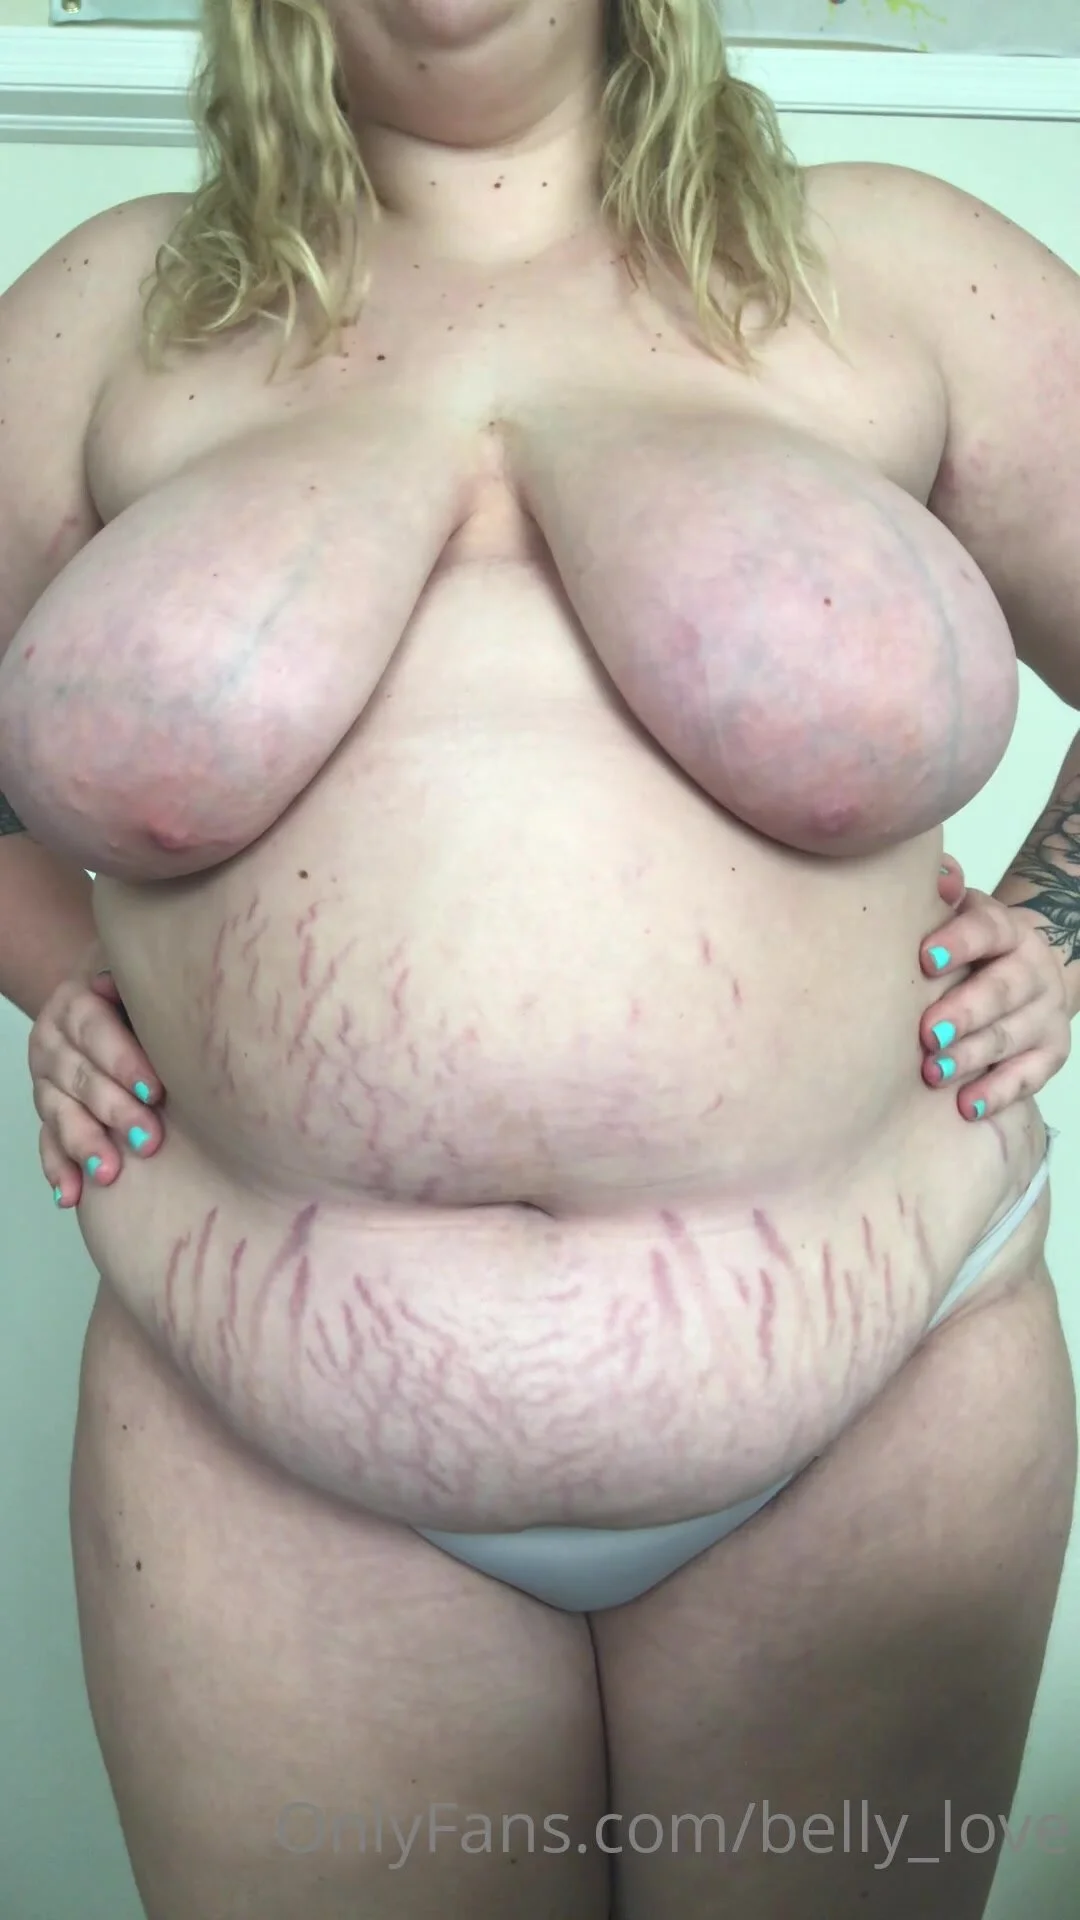 Fat girl stretch marks 4 - ThisVid.com